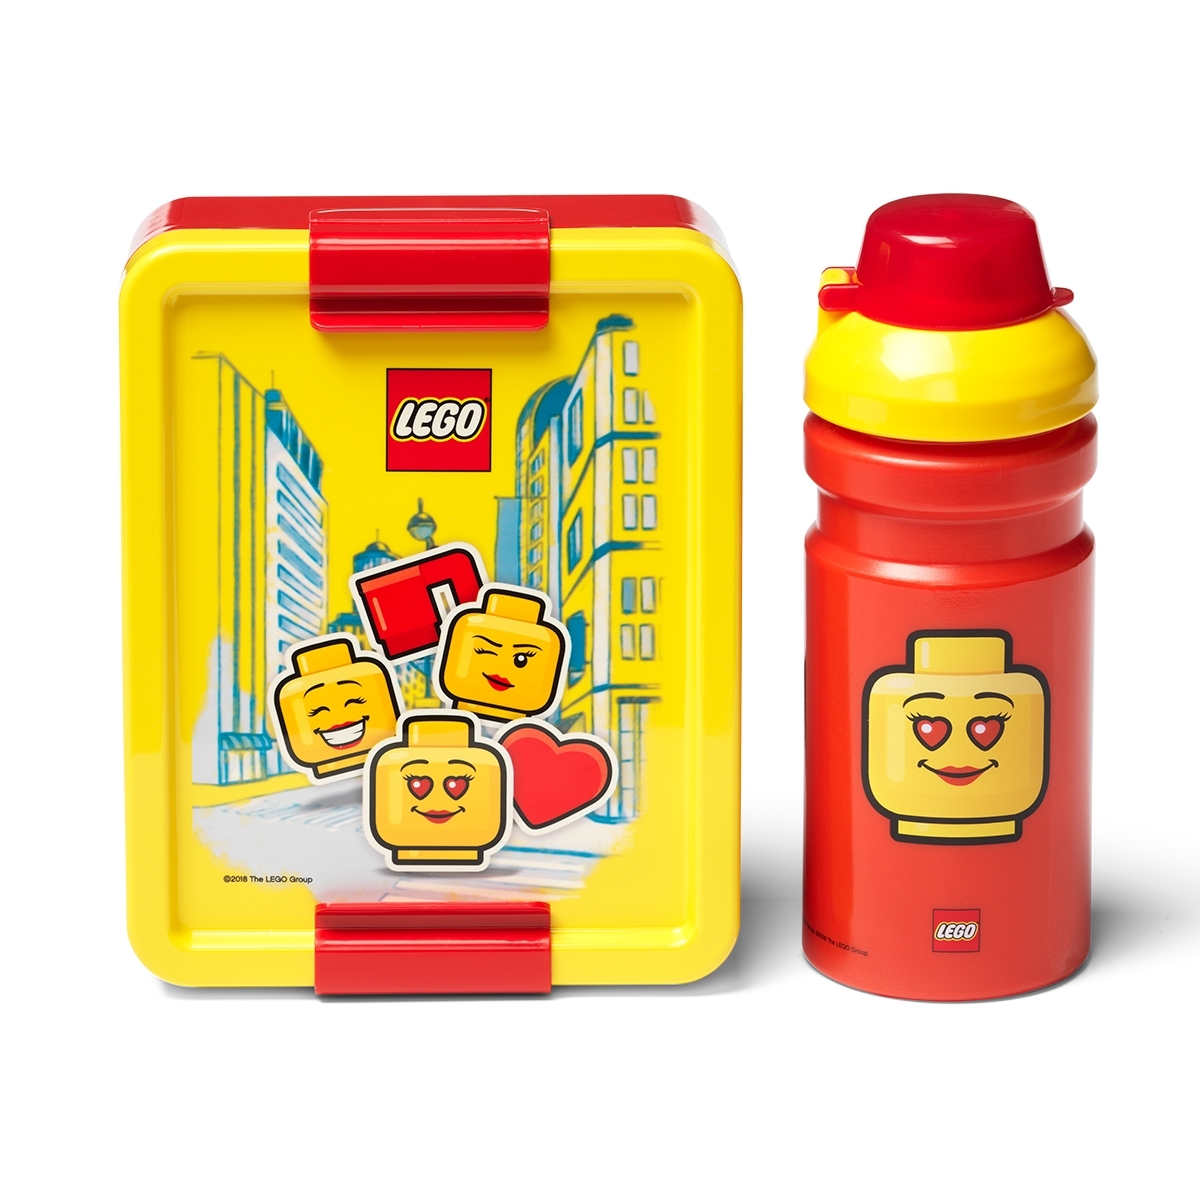 LEGO: Lunch Box - Classic